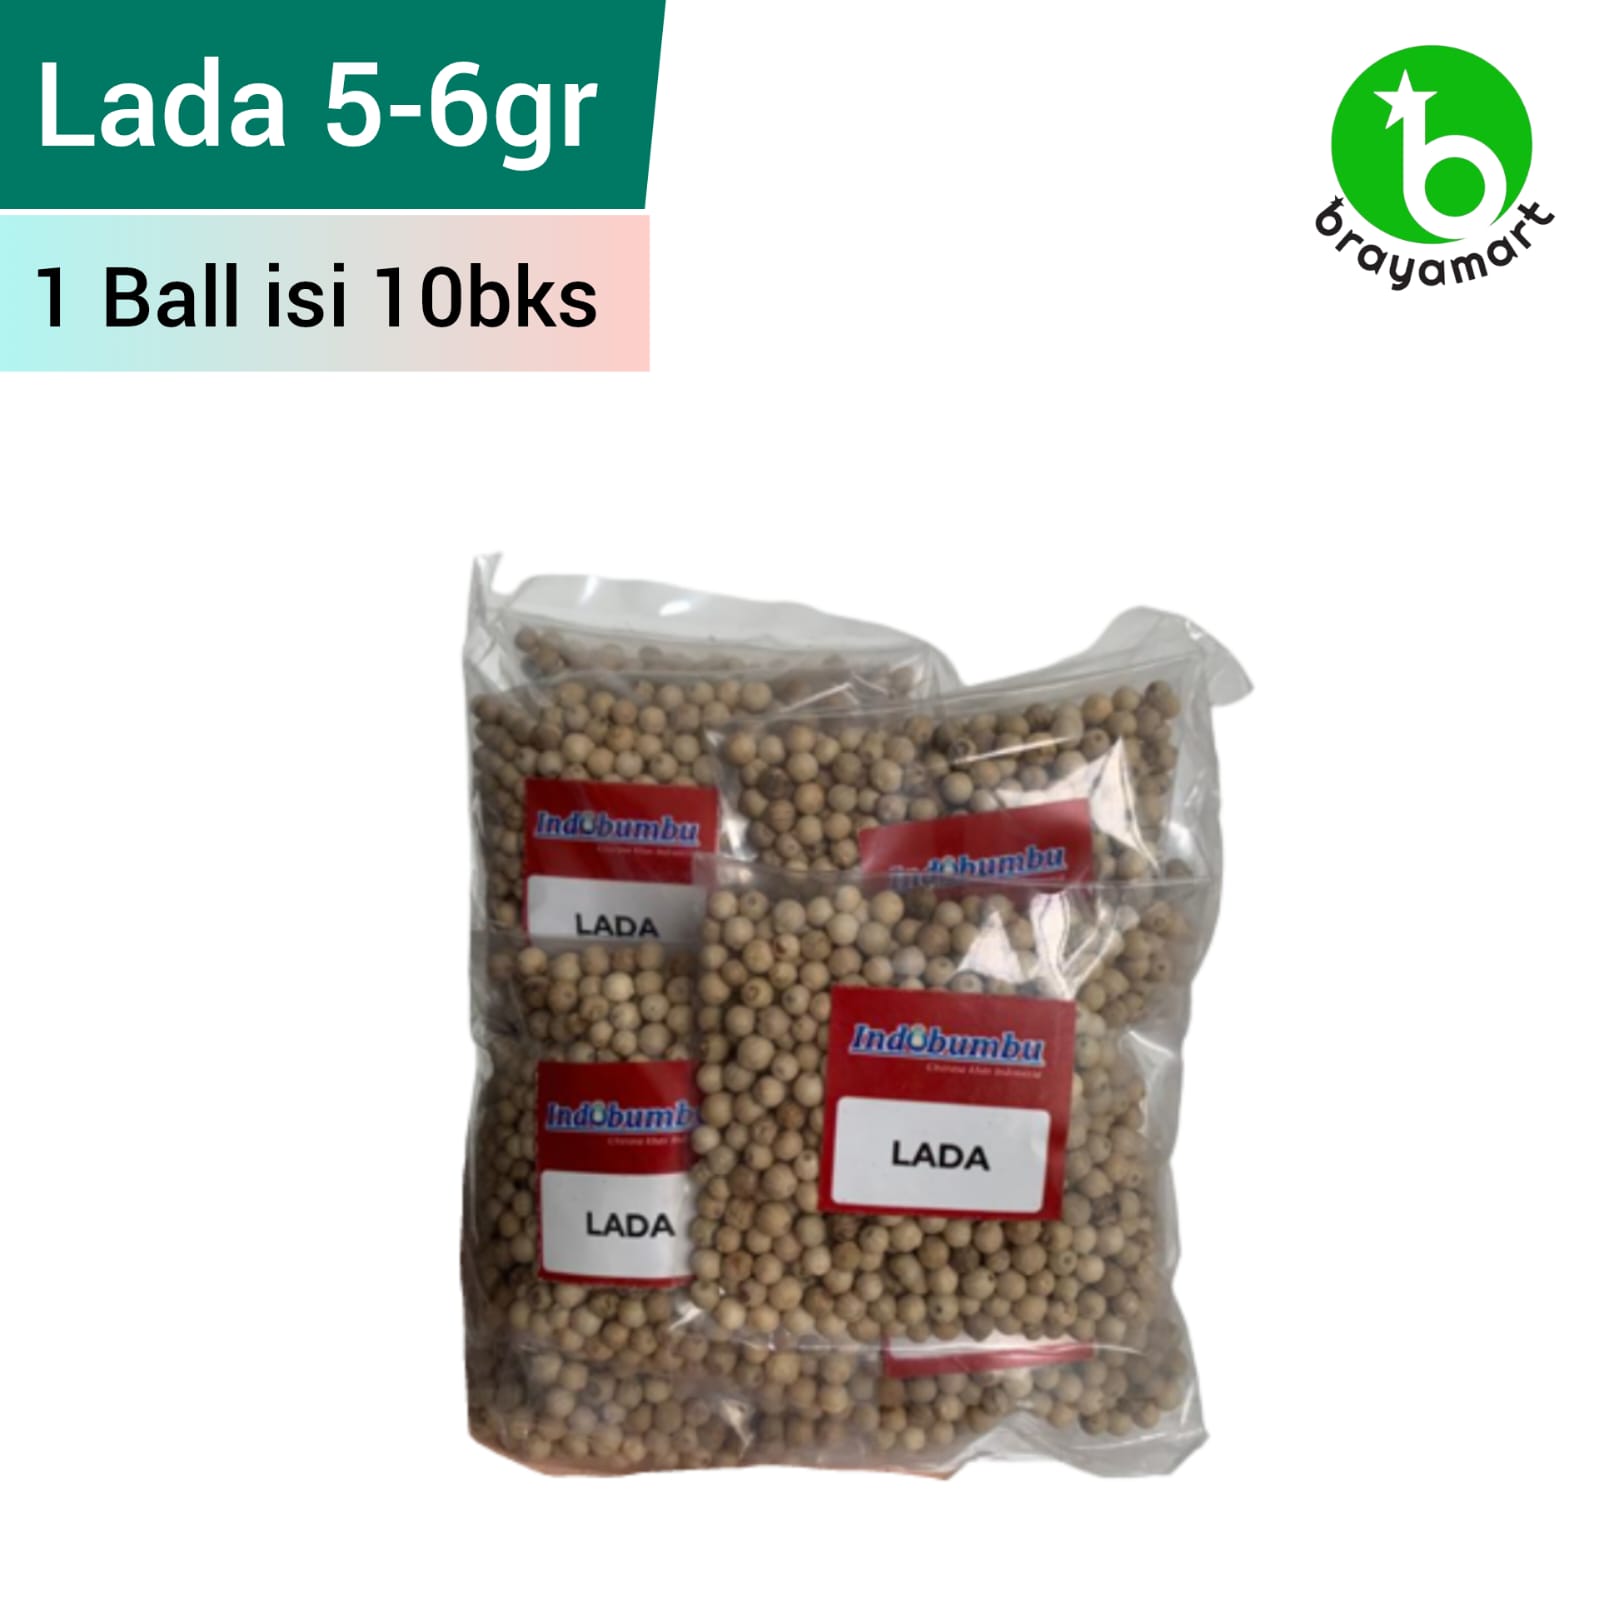 'Lada 5g (1 Ball)'